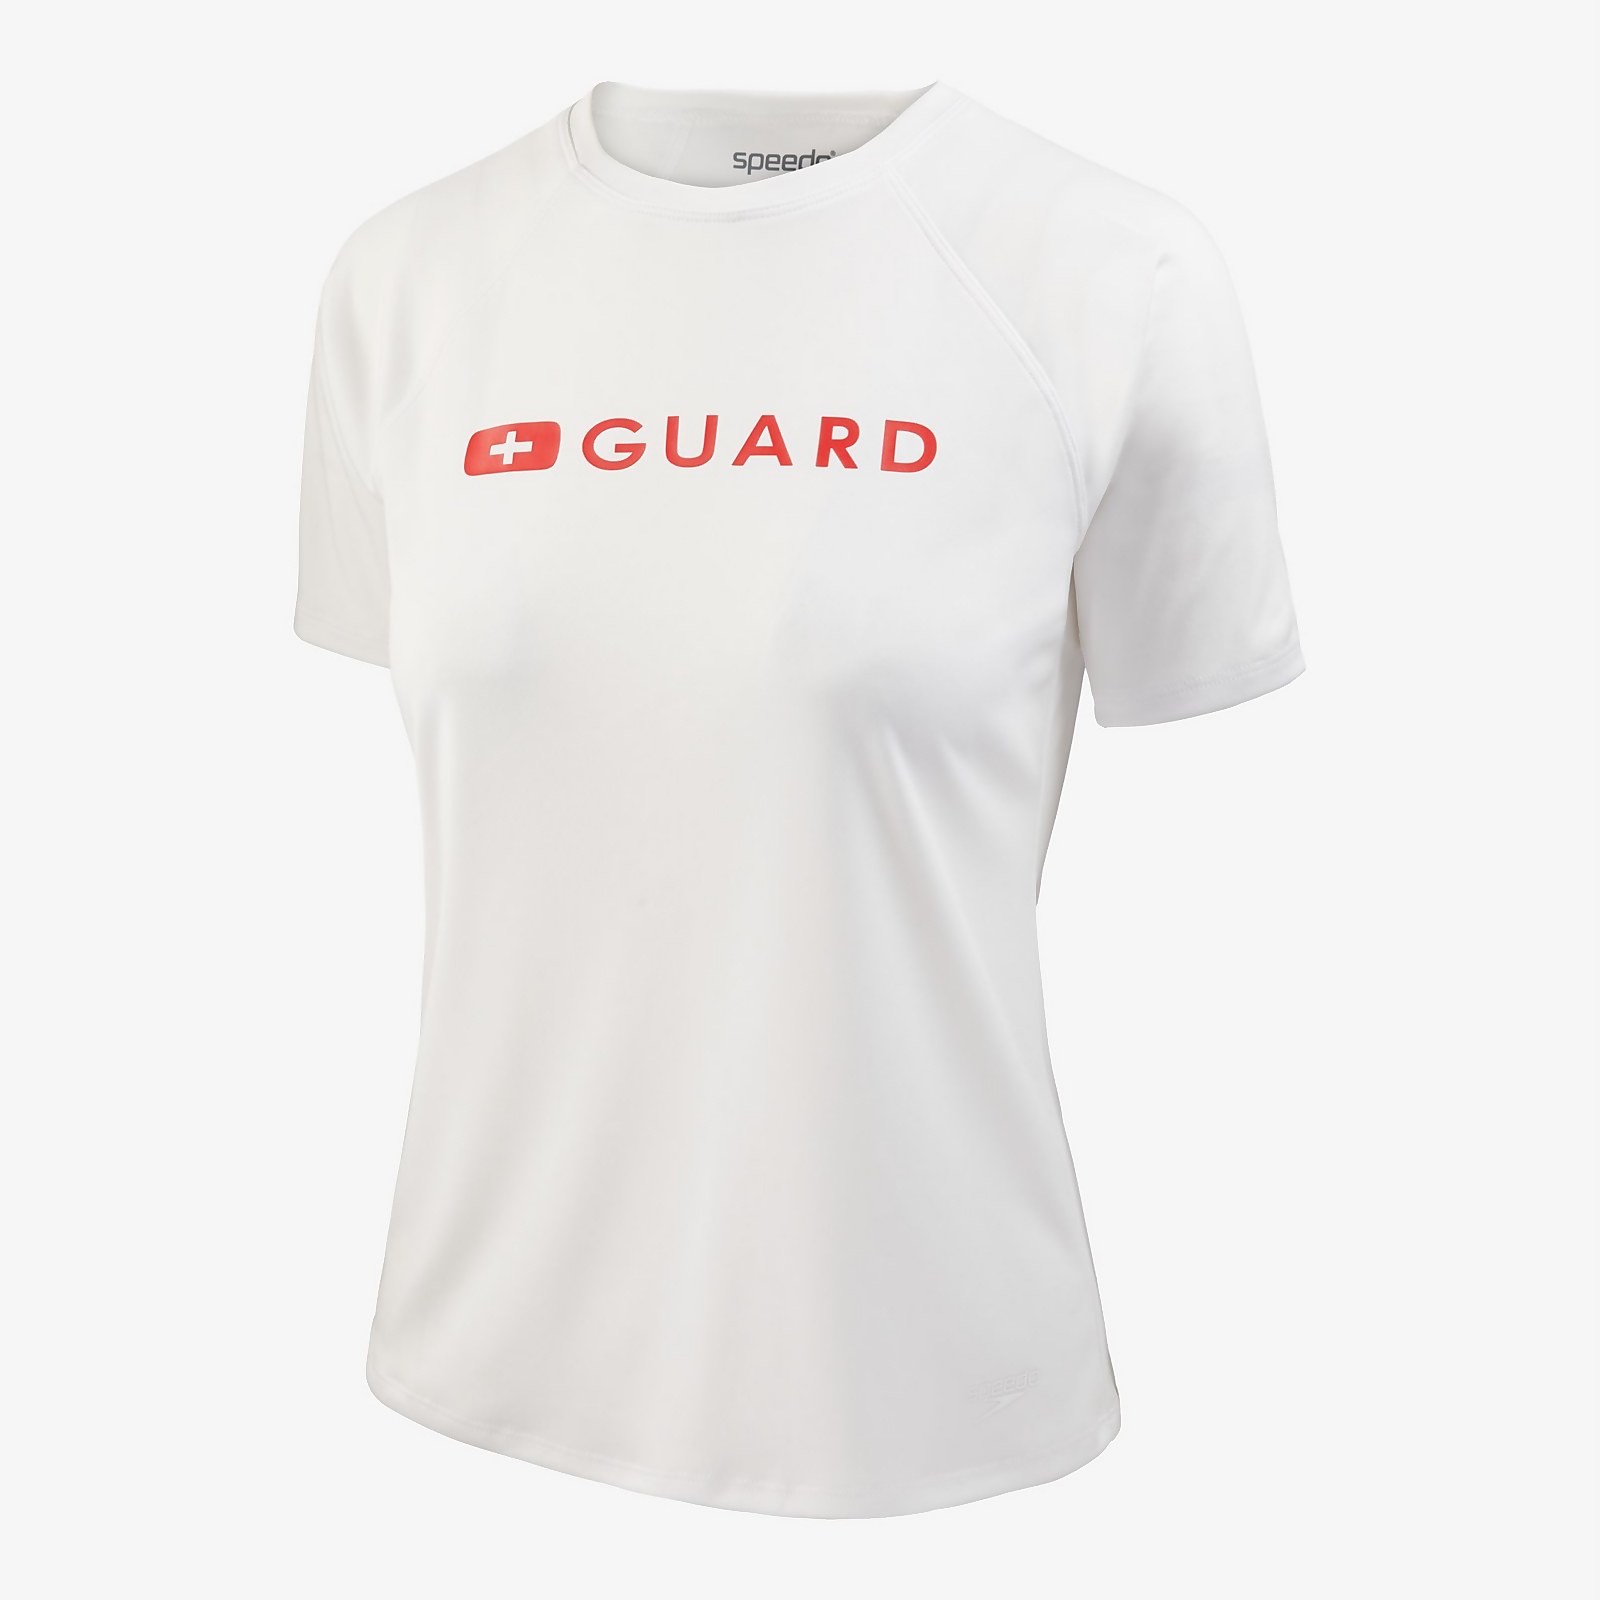 Speedo  Guard Short Sleeve Solid Swim Tee - L    : White